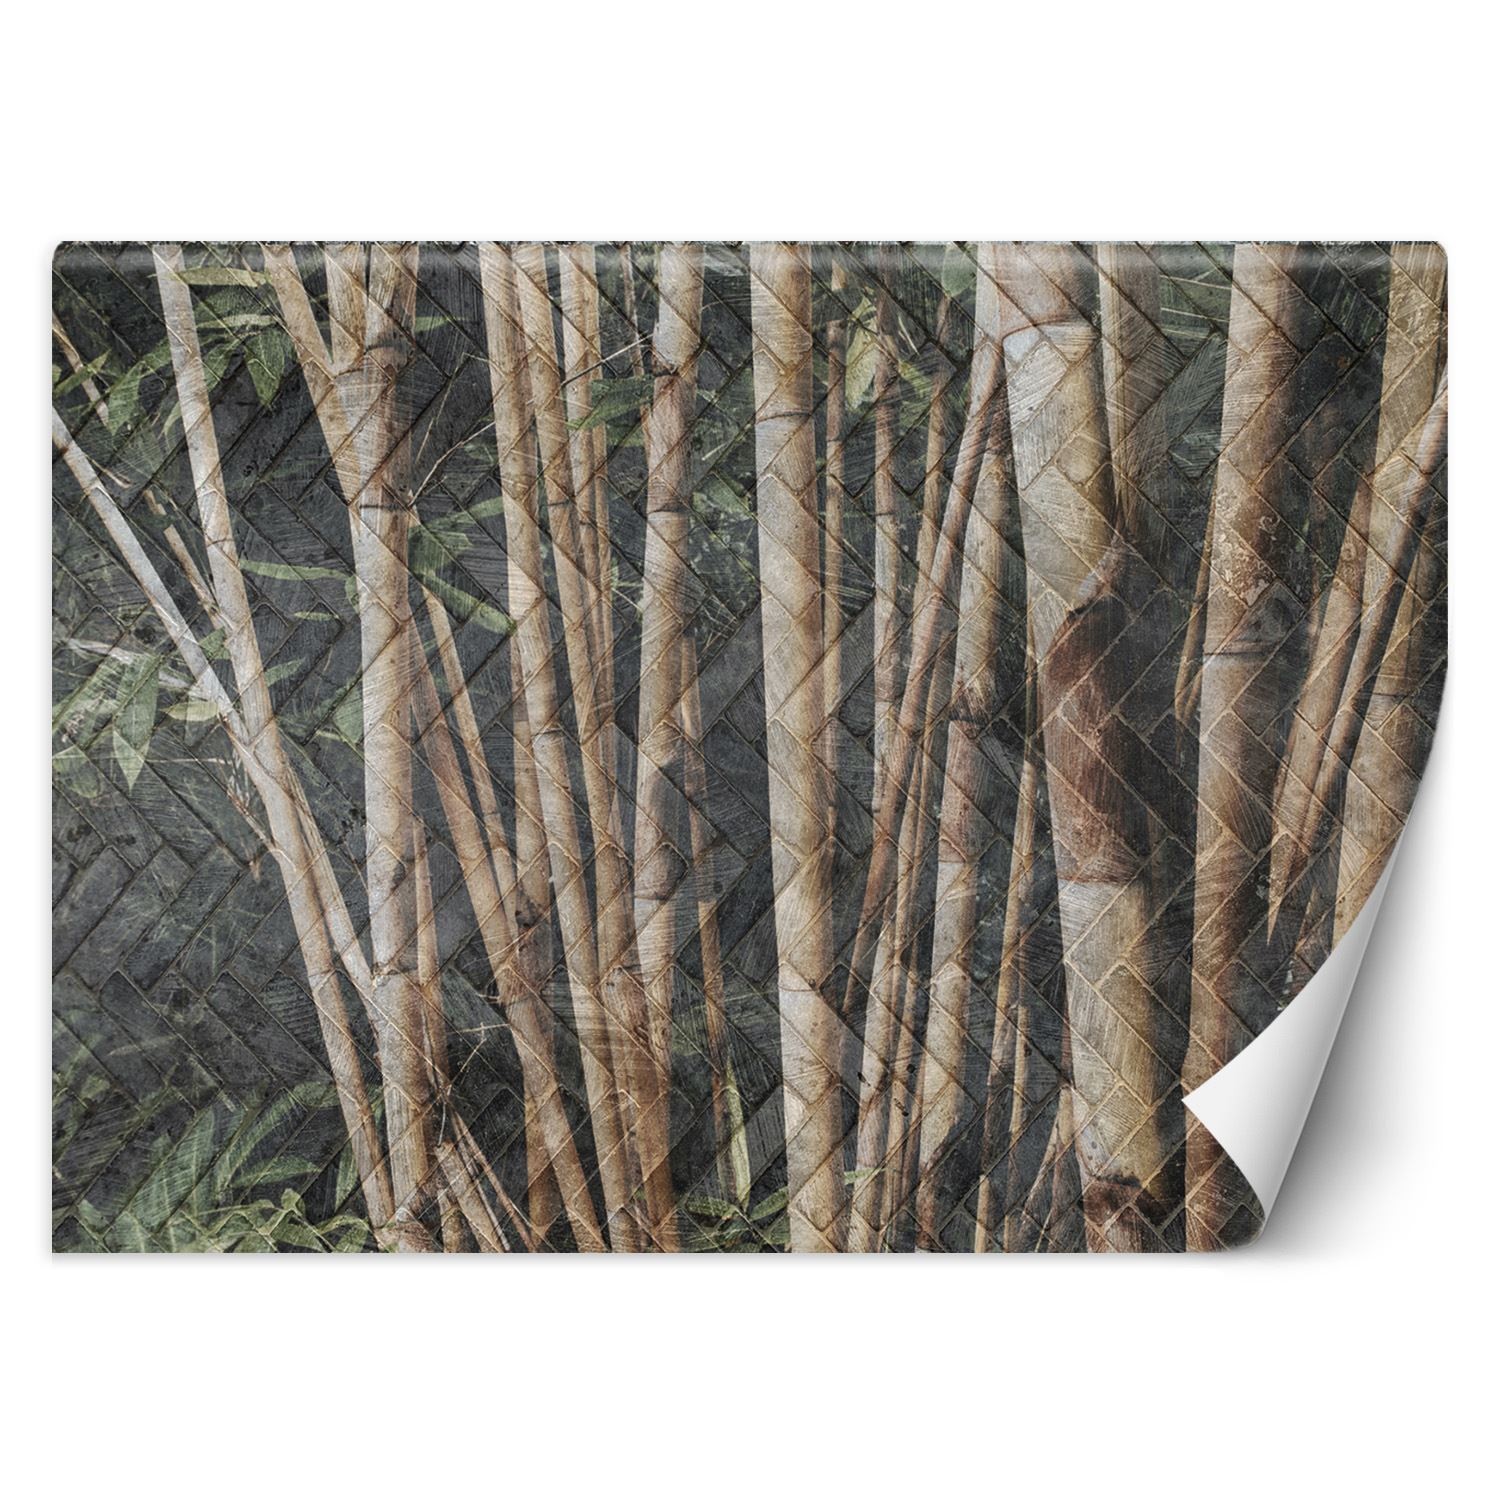 Trend24 – Behang – Bamboo Forest – Vliesbehang – Behang Woonkamer – Fotobehang – 100×70 cm – Incl. behanglijm